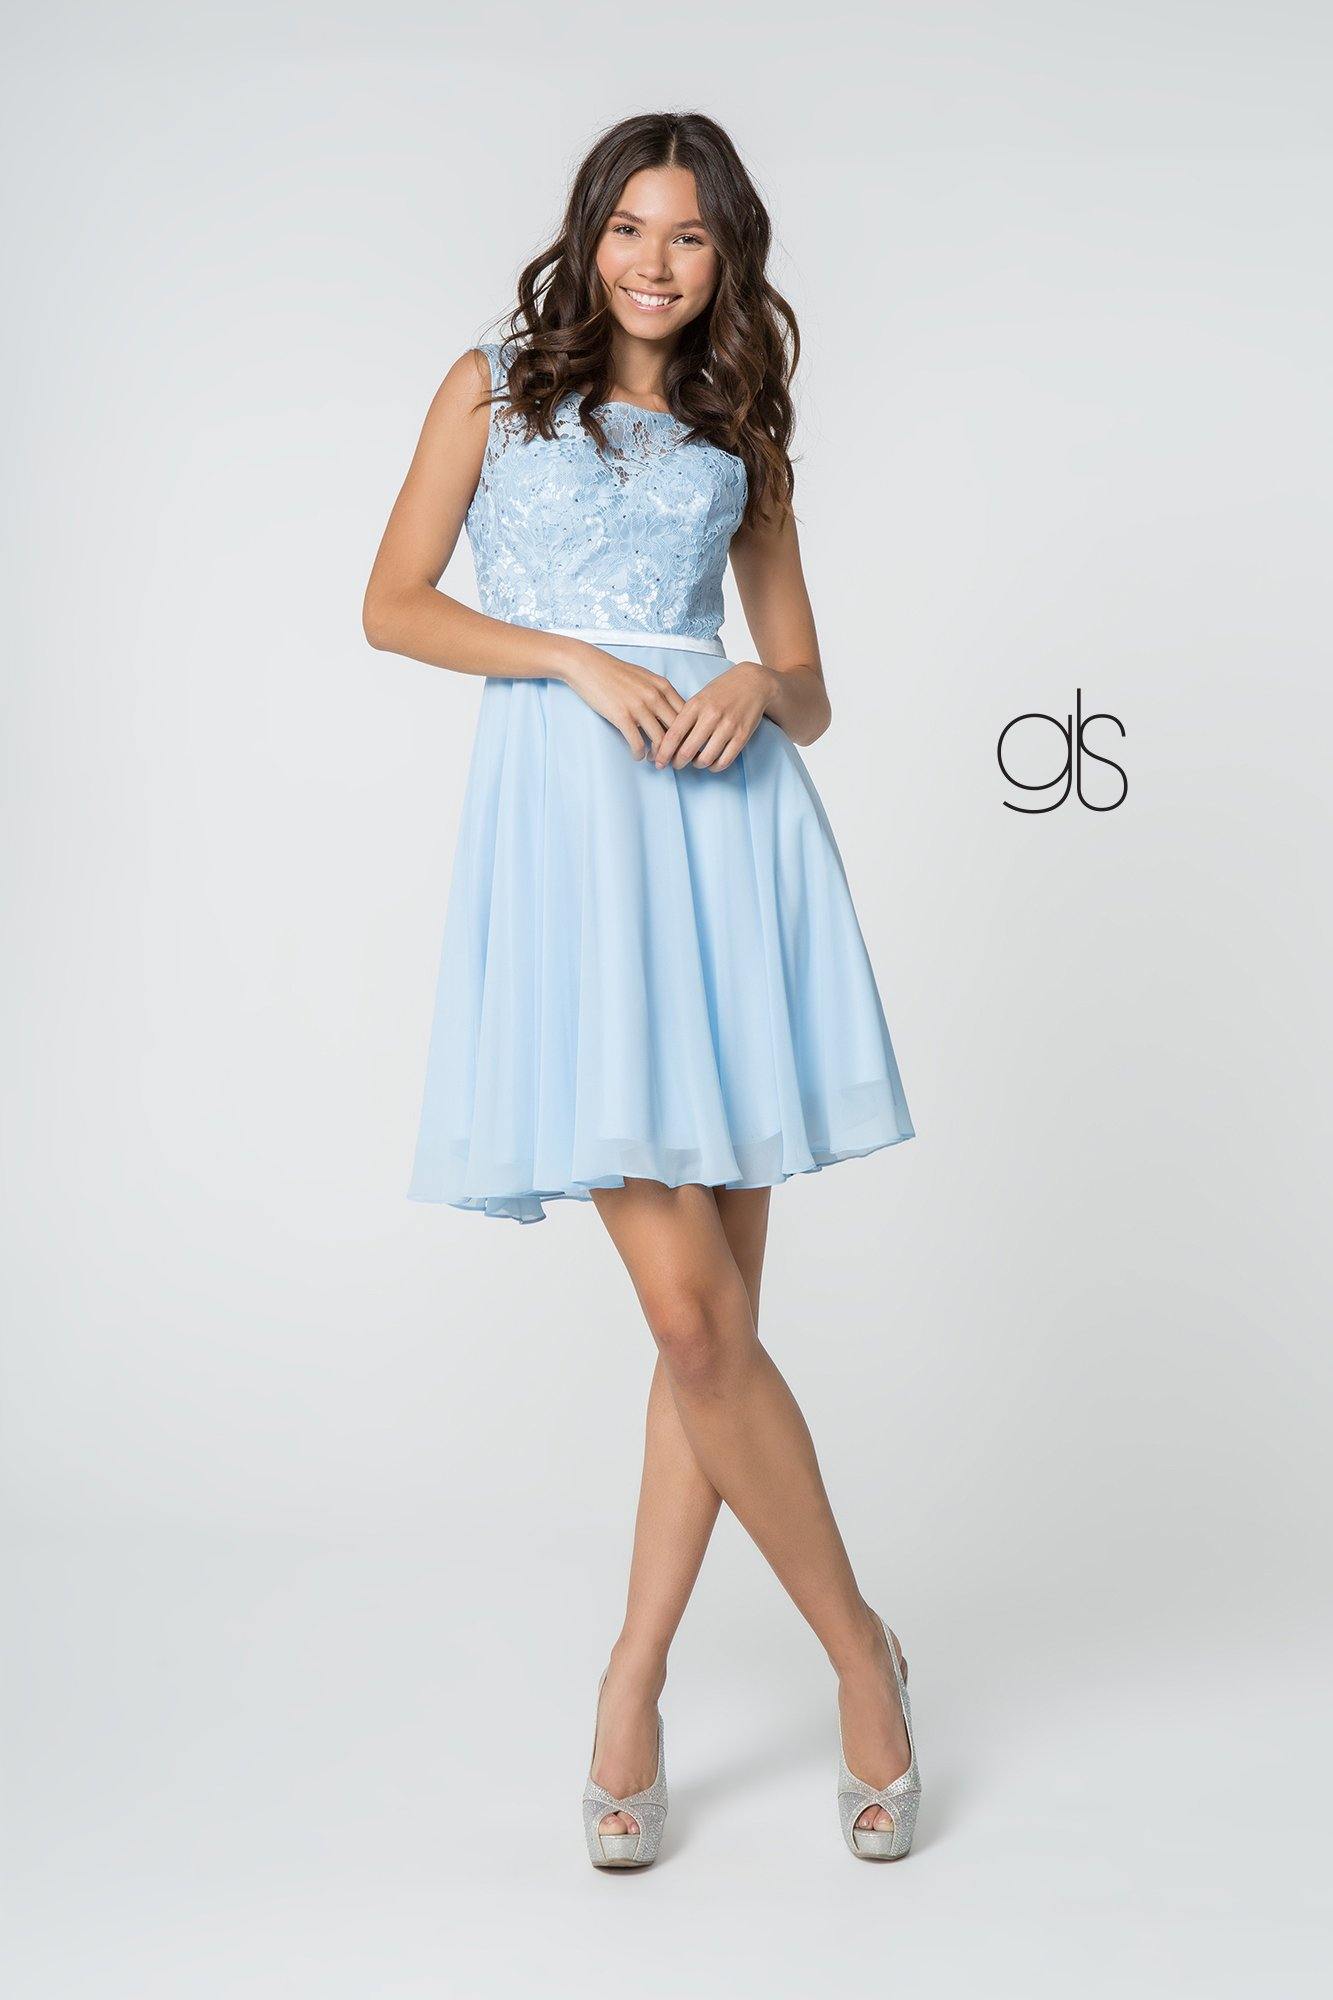 Lace Embellished Bodice Chiffon Short Dress - The Dress Outlet Elizabeth K